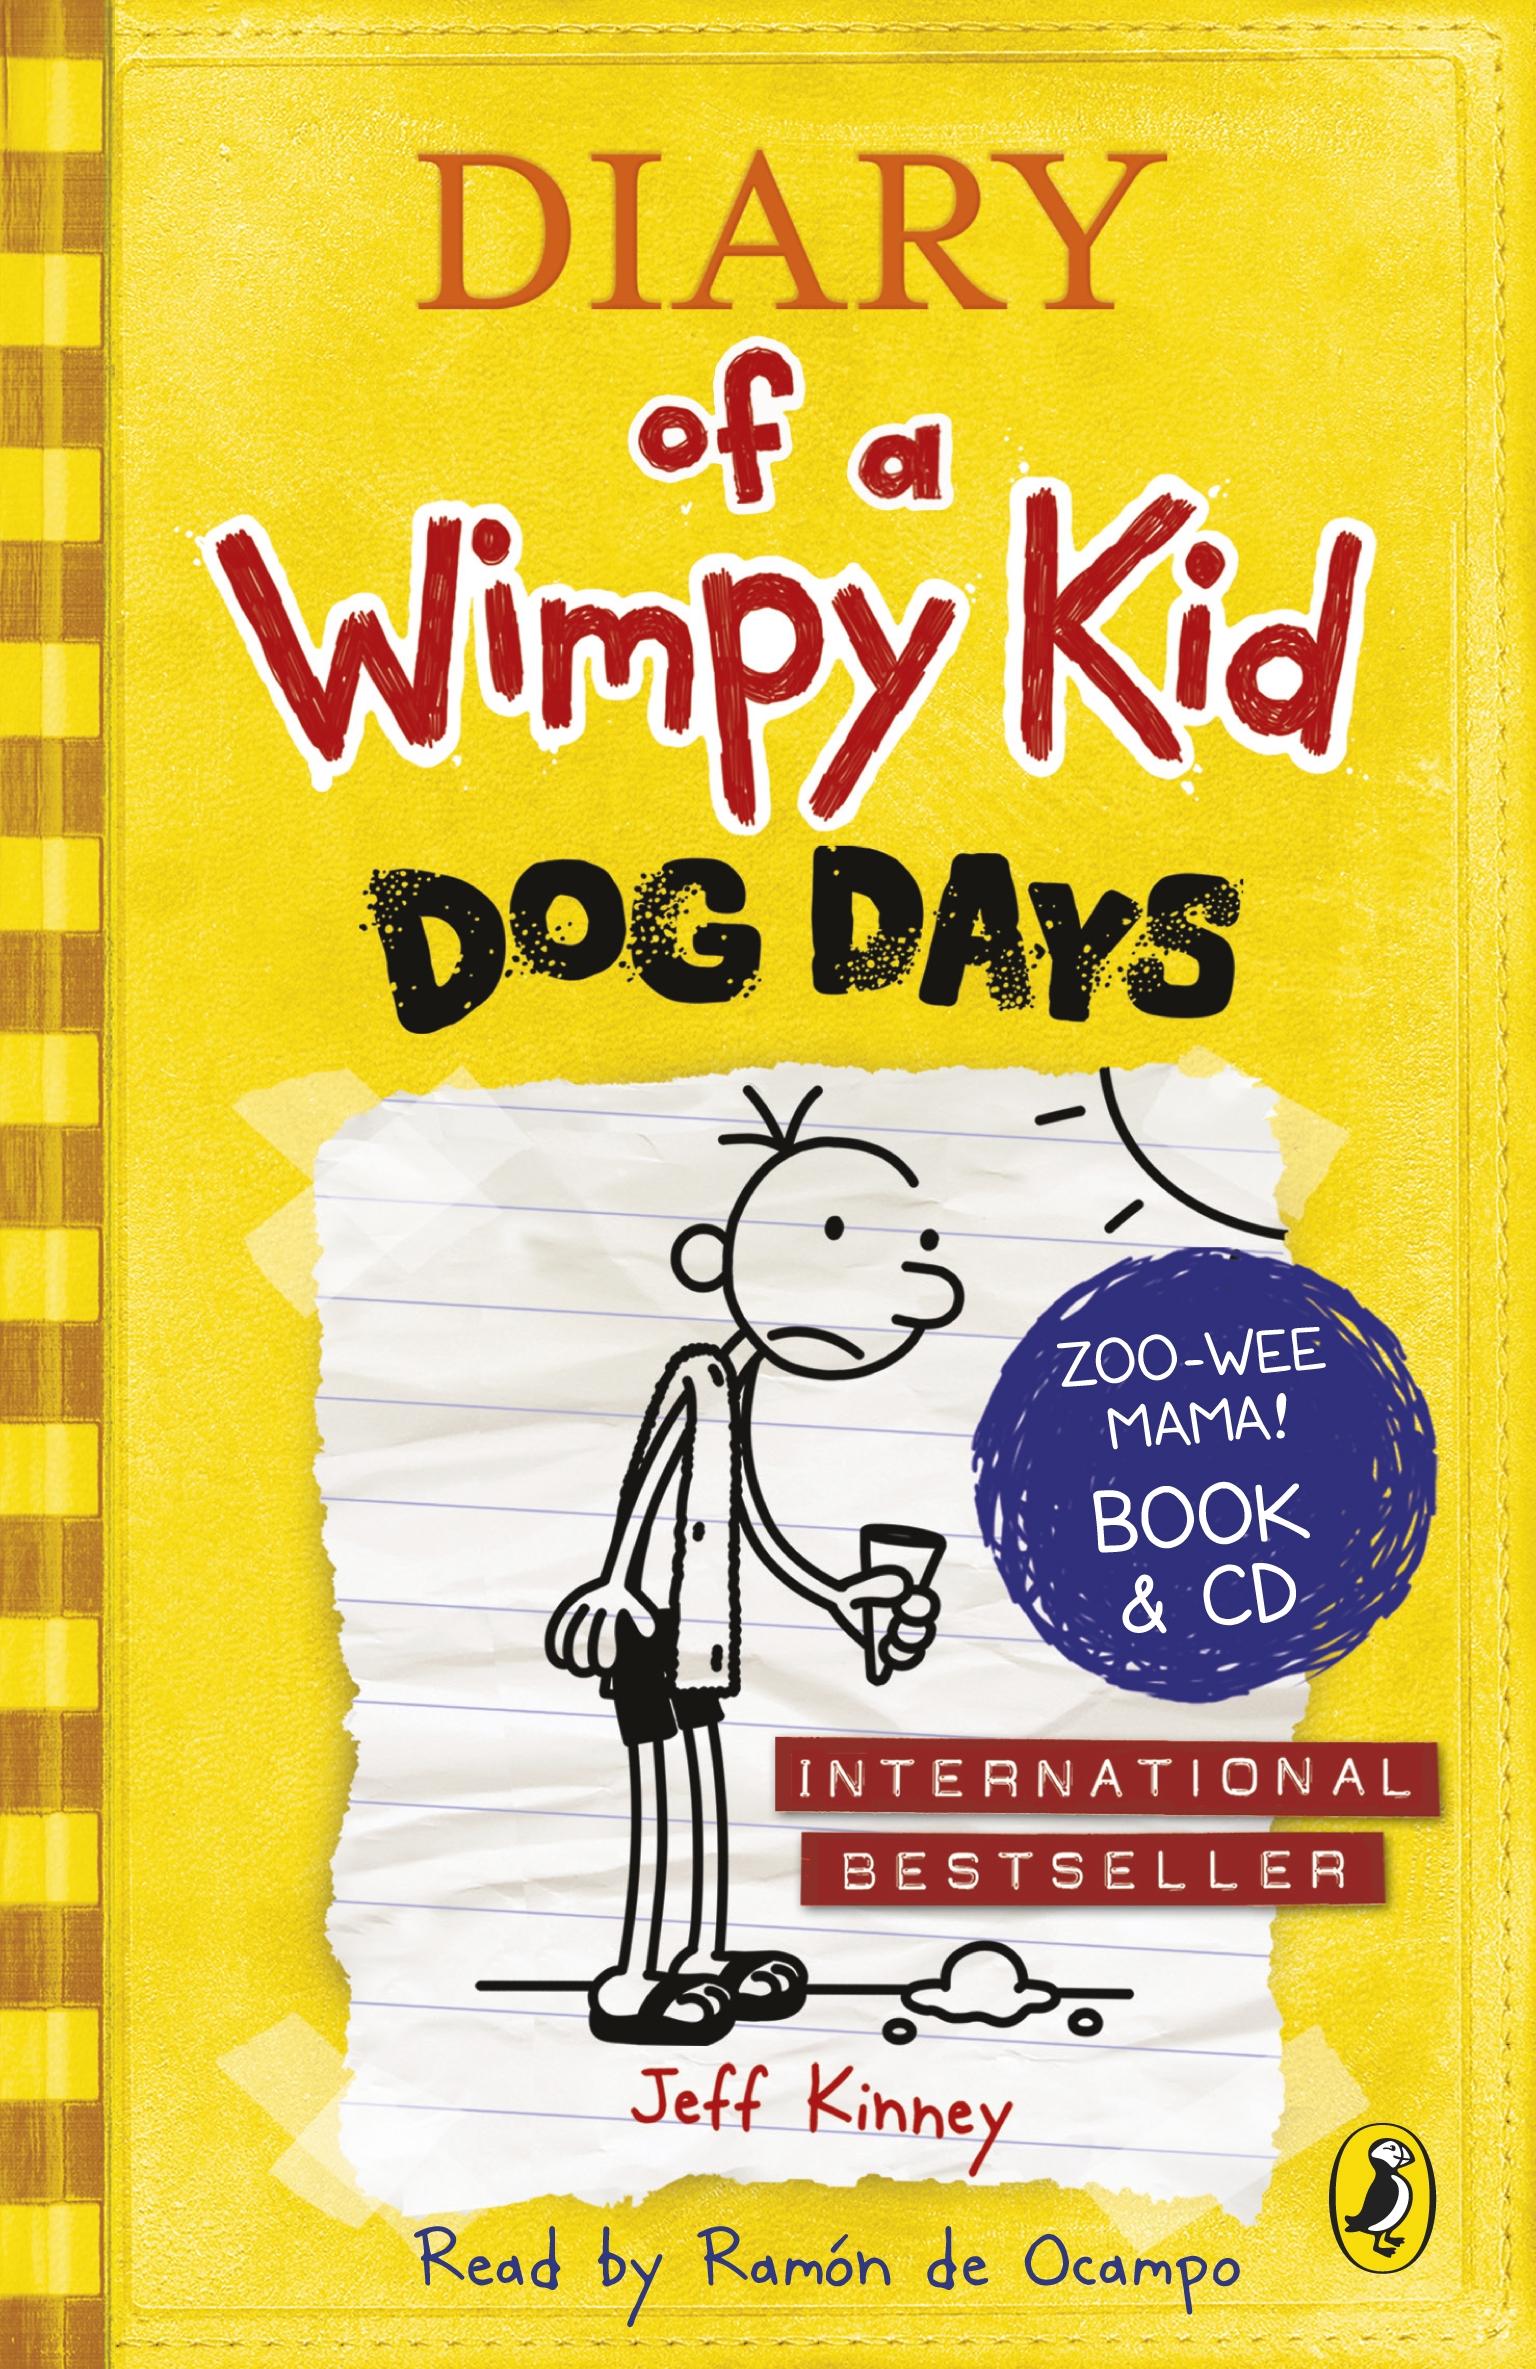 Diary of a Wimpy Kid: Dog Days (Book 4) / Jeff Kinney / Taschenbuch / 240 S. / Englisch / 2011 / Penguin Random House Children's UK / EAN 9780141340548 - Kinney, Jeff